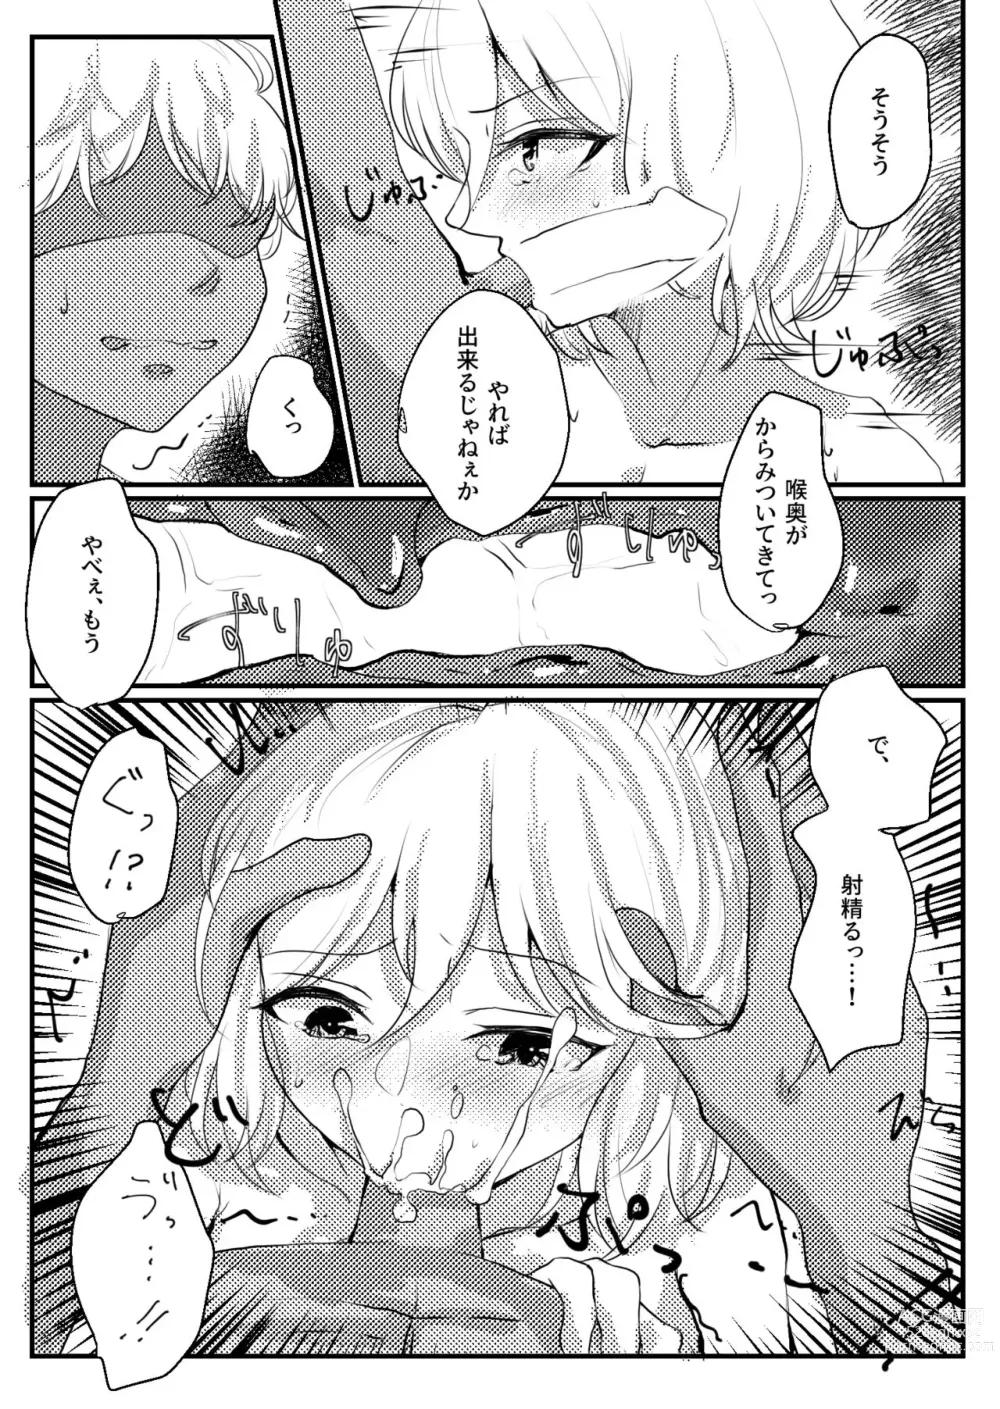 Page 7 of doujinshi Mashiro-chan MobRa